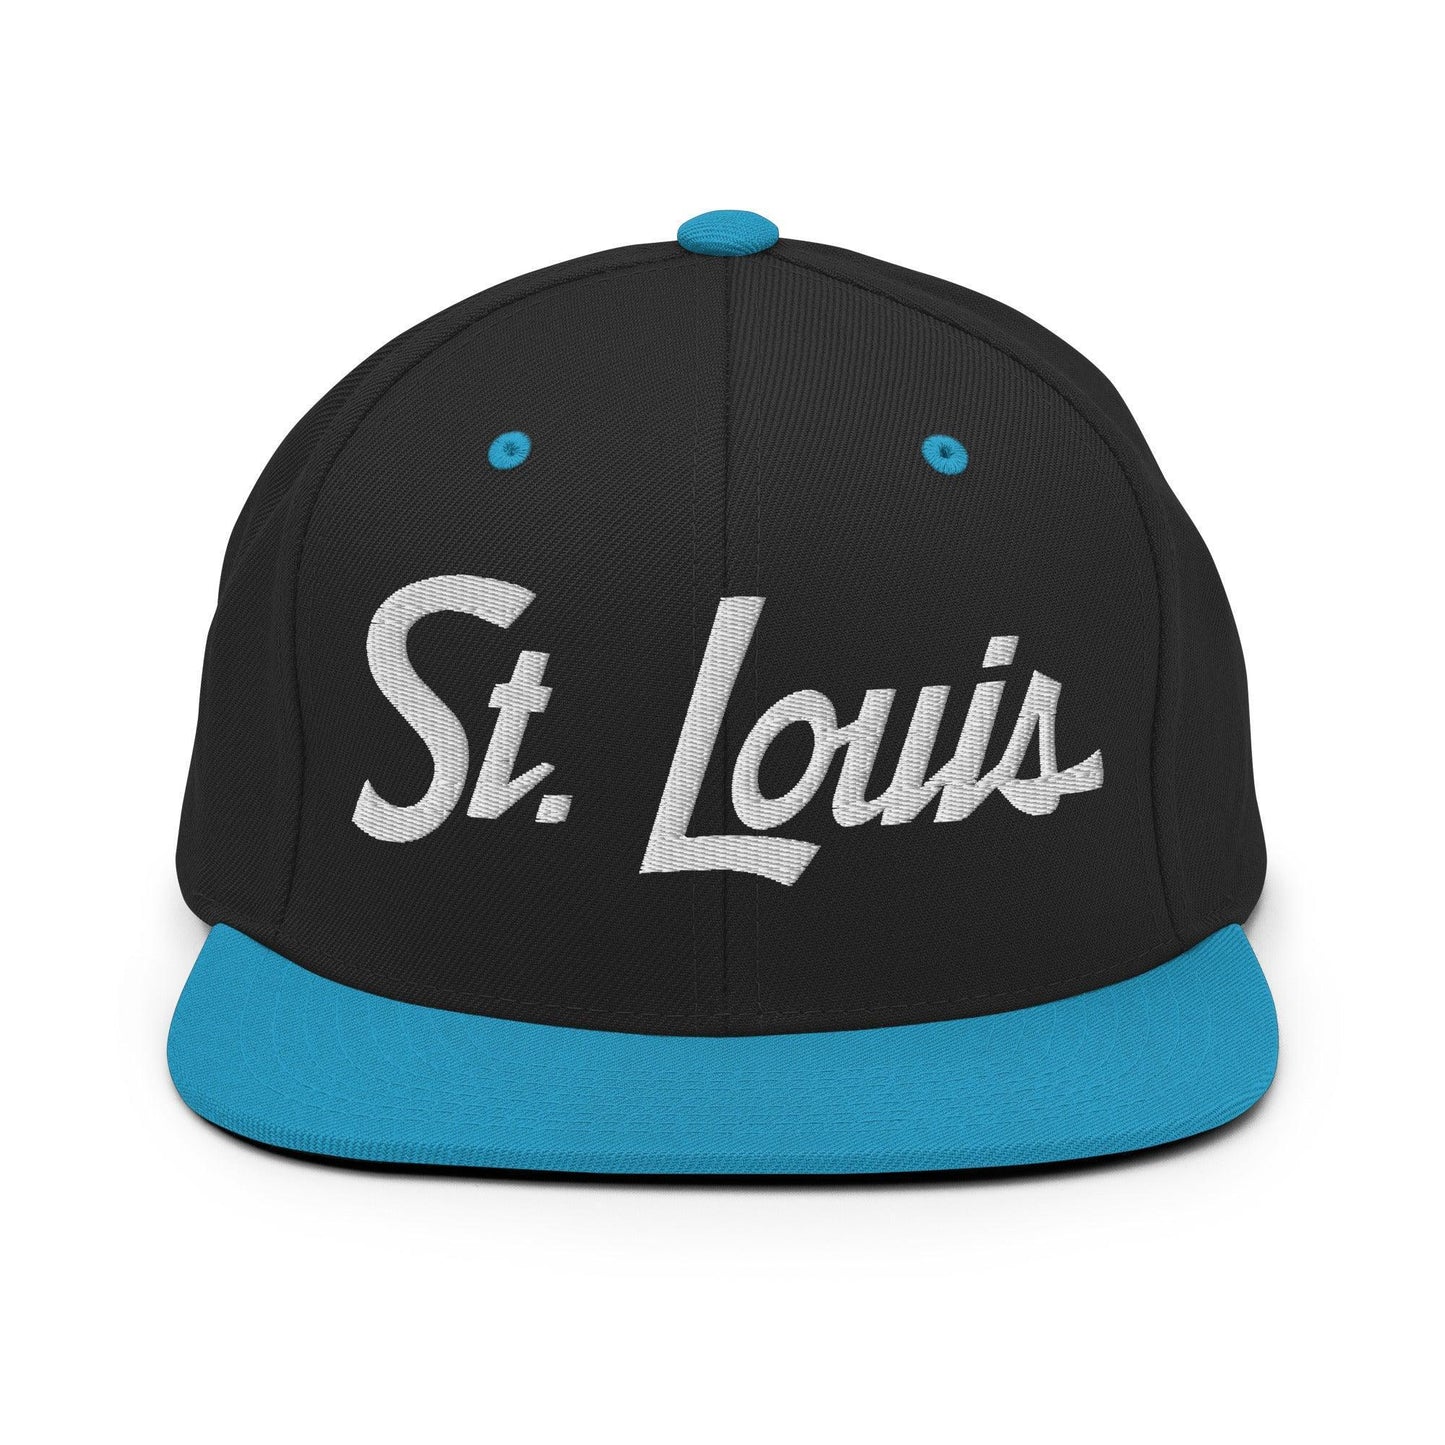 St. Louis Script Snapback Hat Black Teal